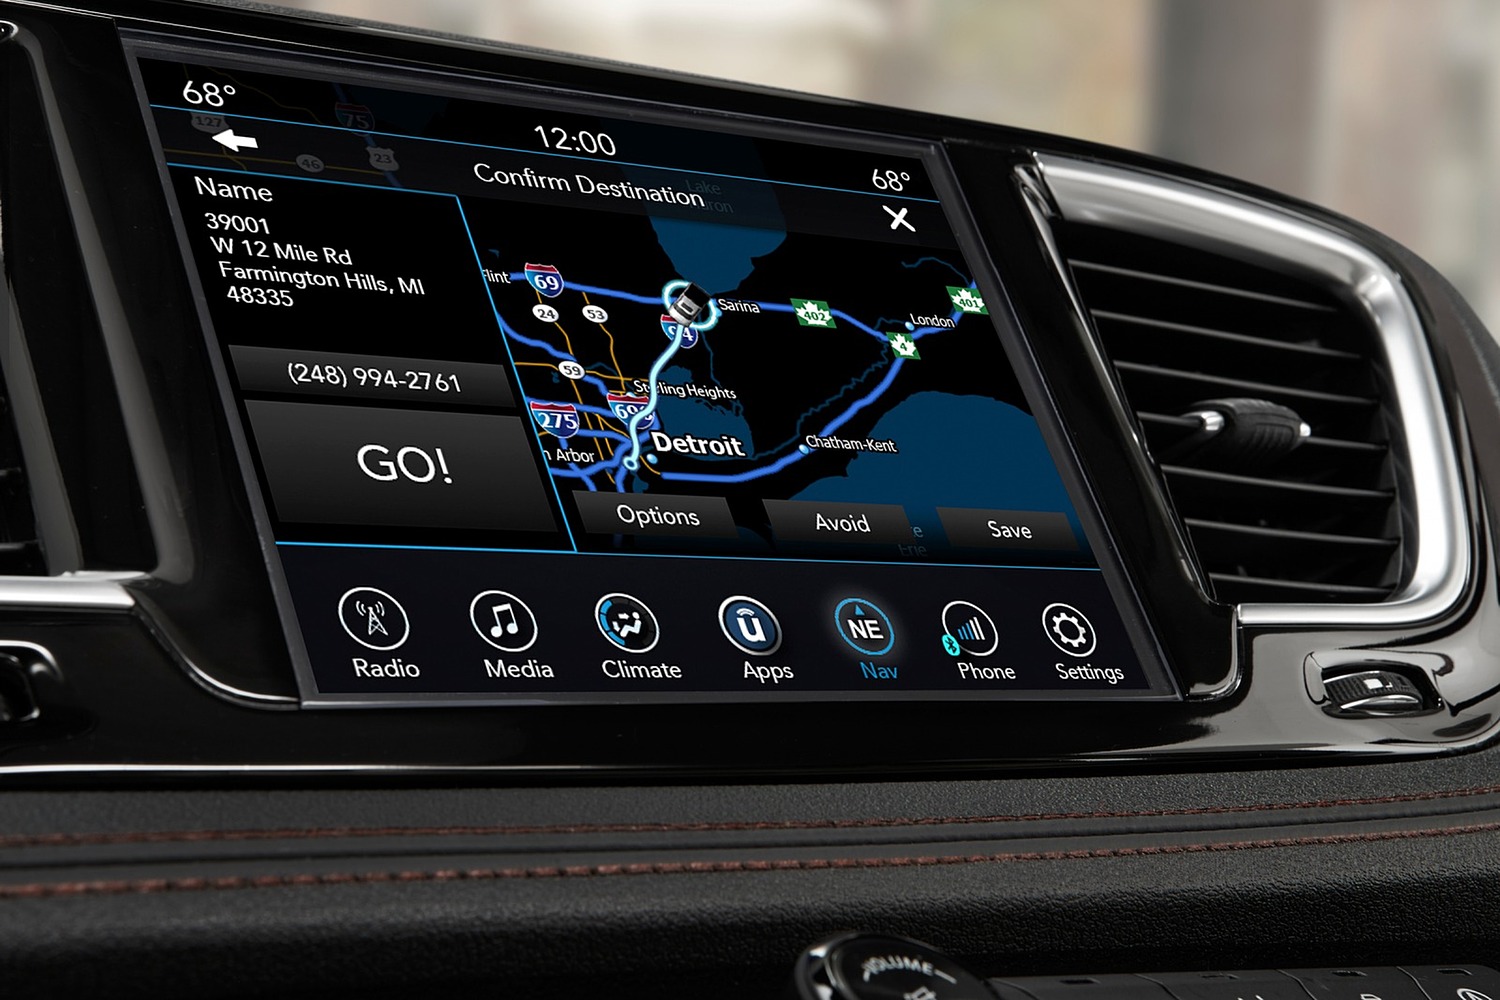 2017 Chrysler Pacifica Limited Passenger Minivan Navigation System